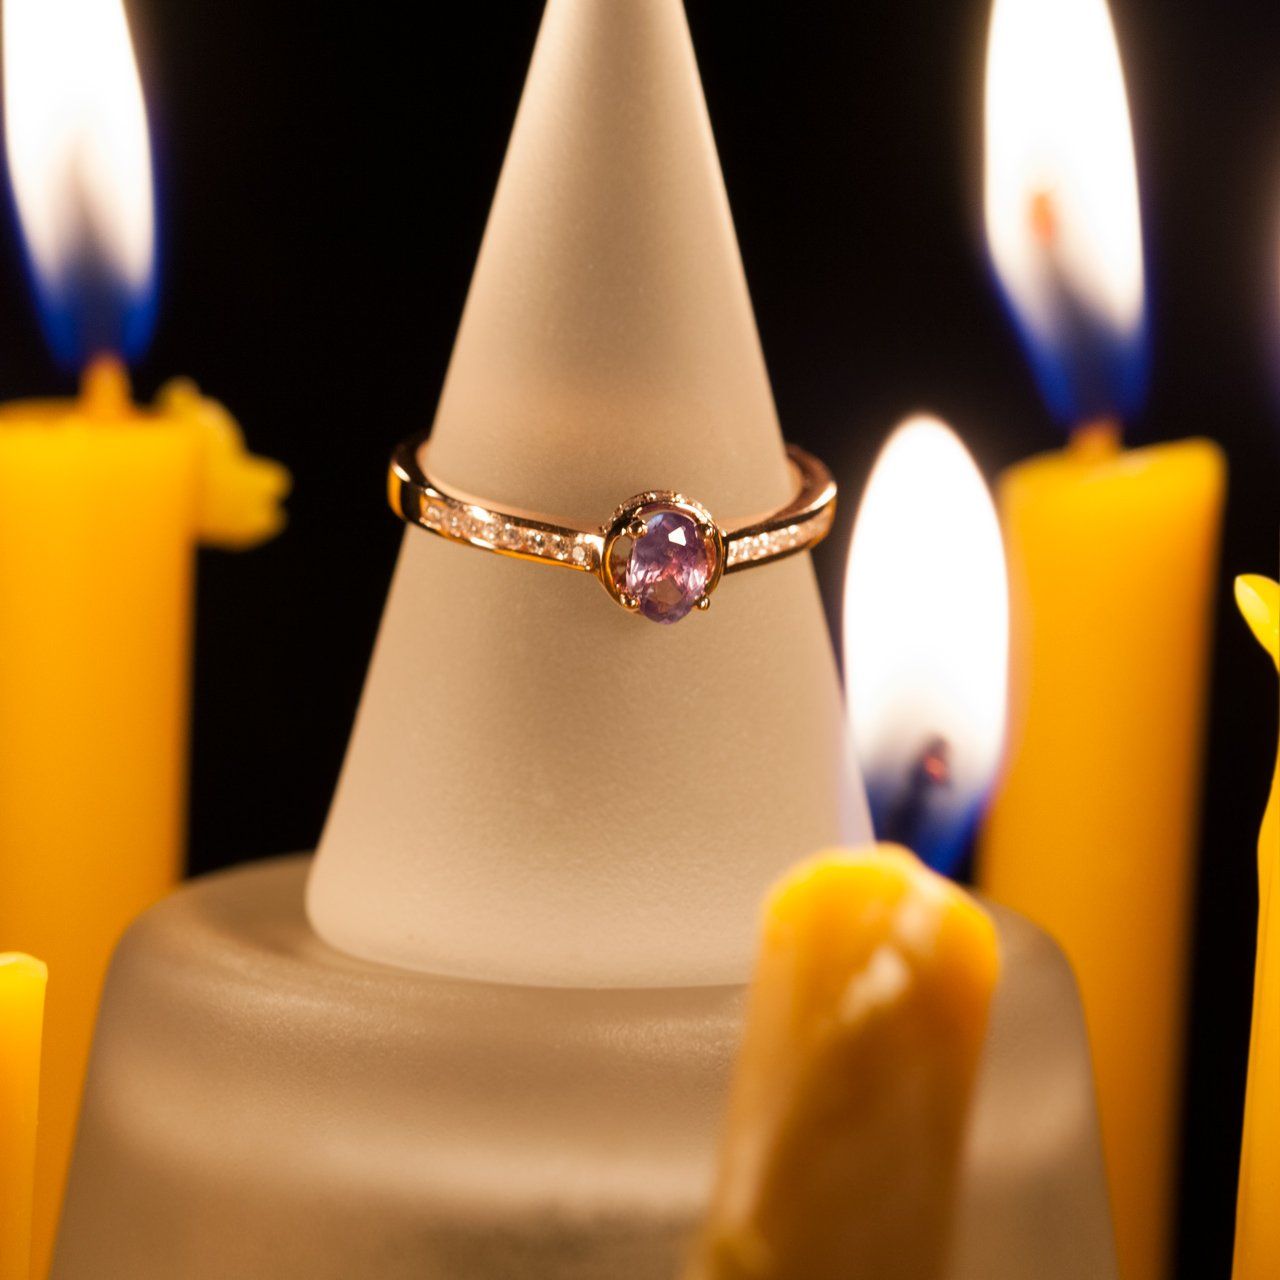 June Birthstone! Natural Alexandrite Diamond 18k Rose Gold Engagement Ring - The Alexandrite